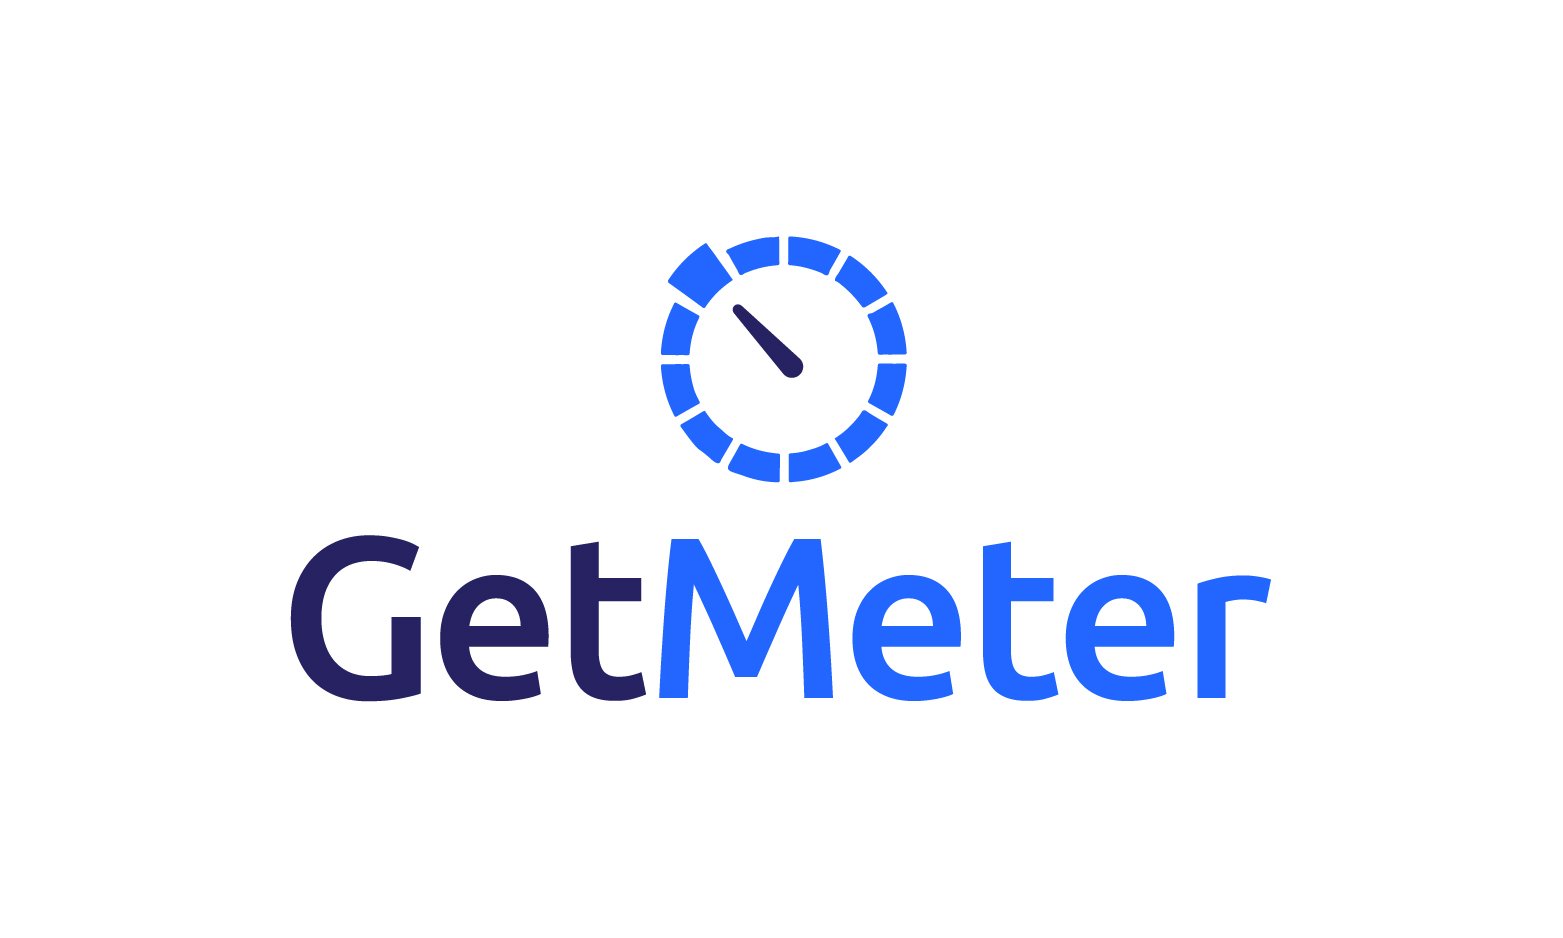 GetMeter.com - Creative brandable domain for sale